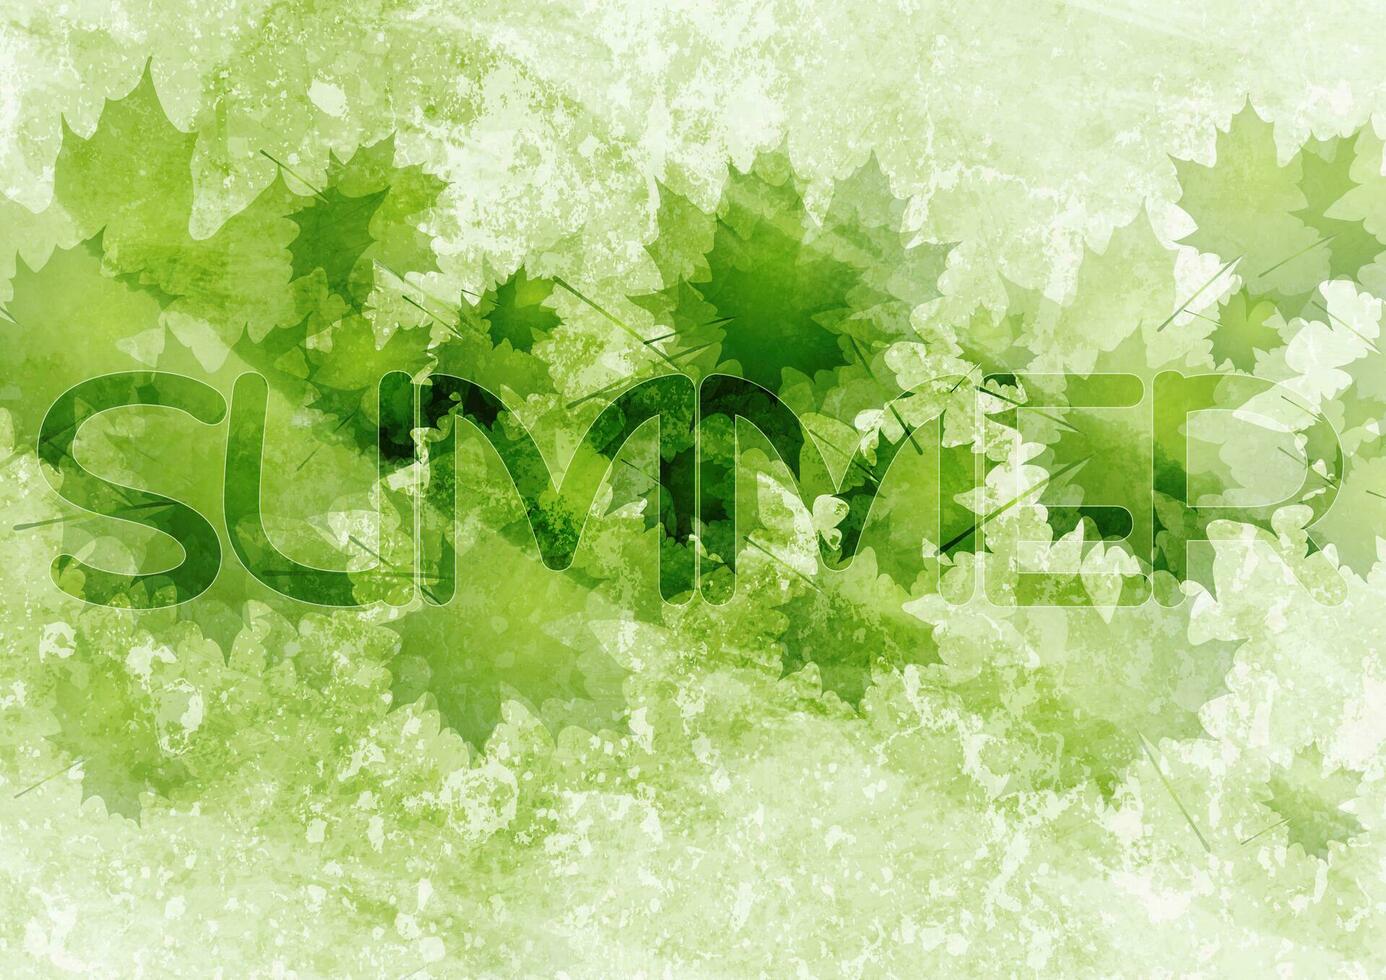 grunge sommar eco bakgrund med grön löv vektor